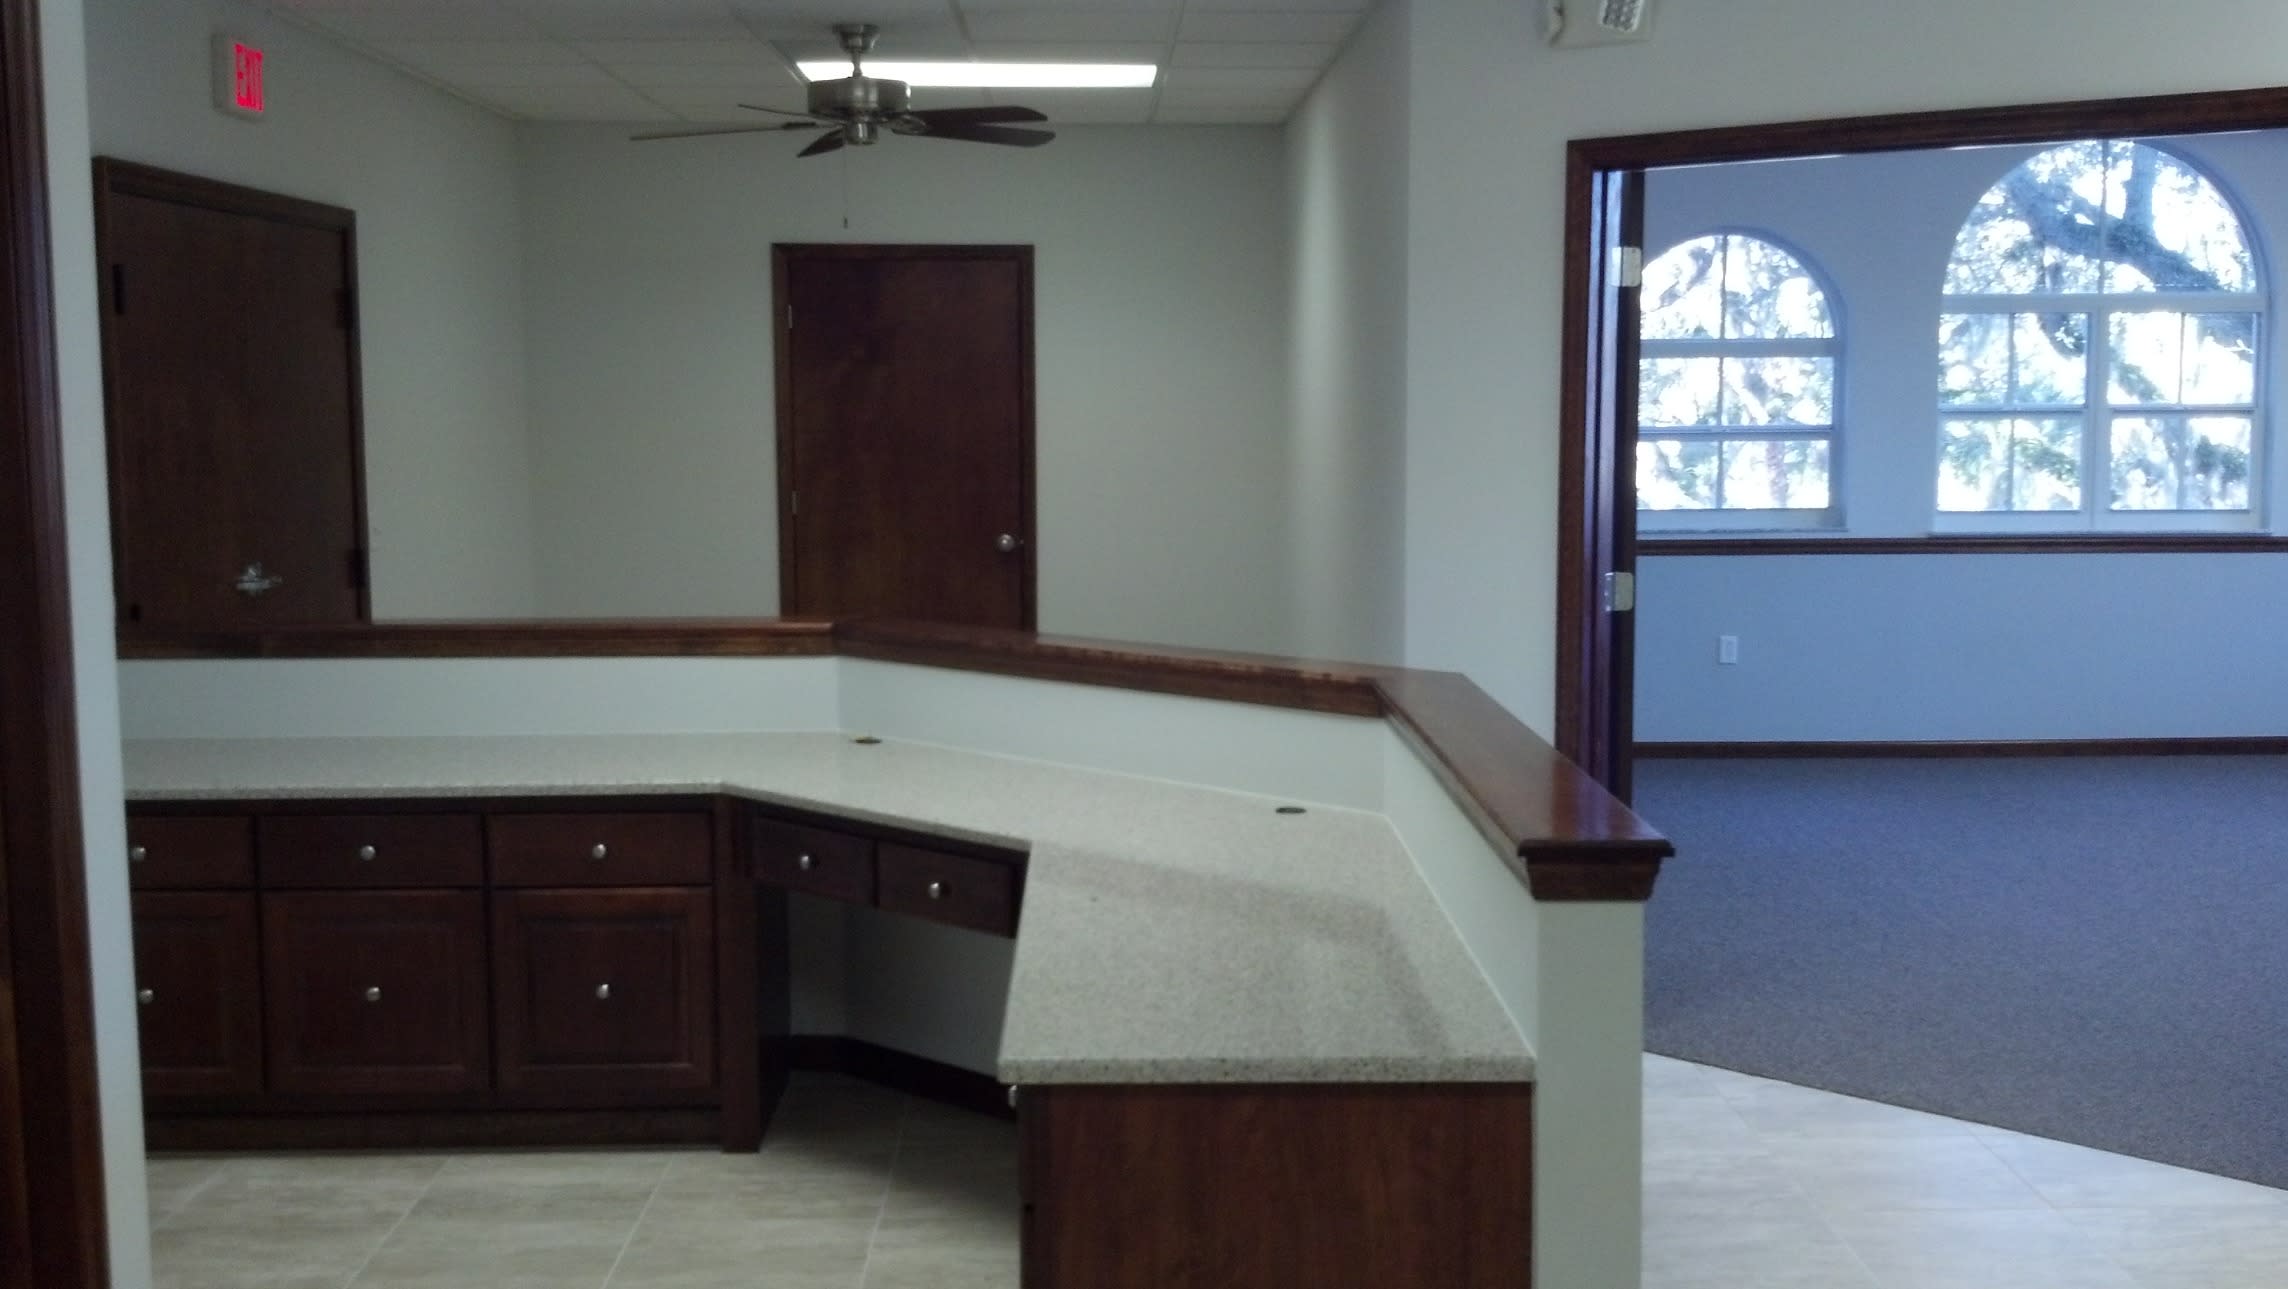 Transocean Office Center Vero Beach (772)794-2505